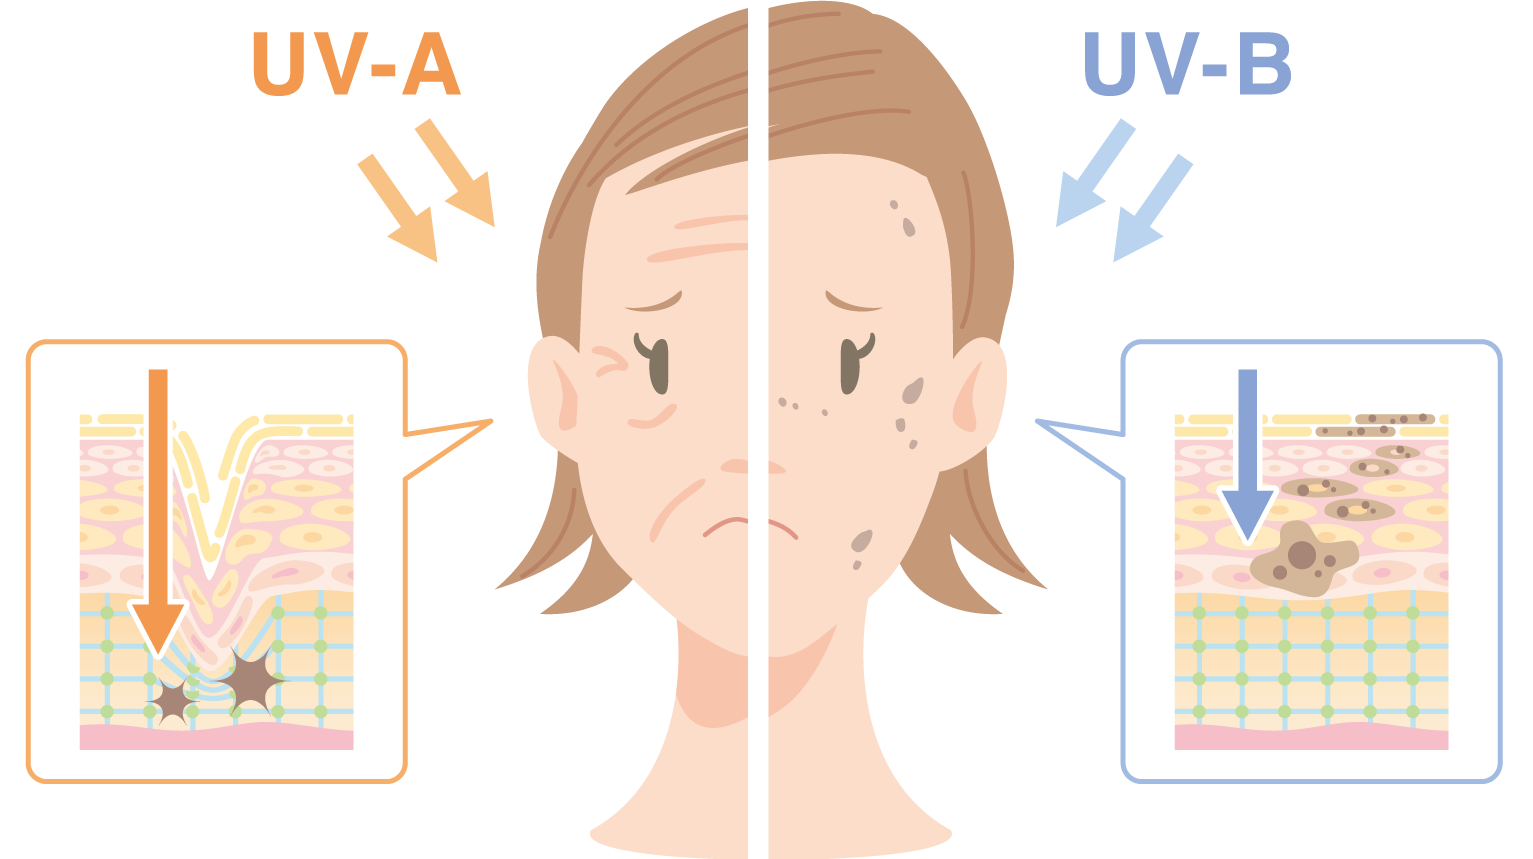 「UVB」は「シミ」の原因「UVA」は「シワ・たるみ」の原因